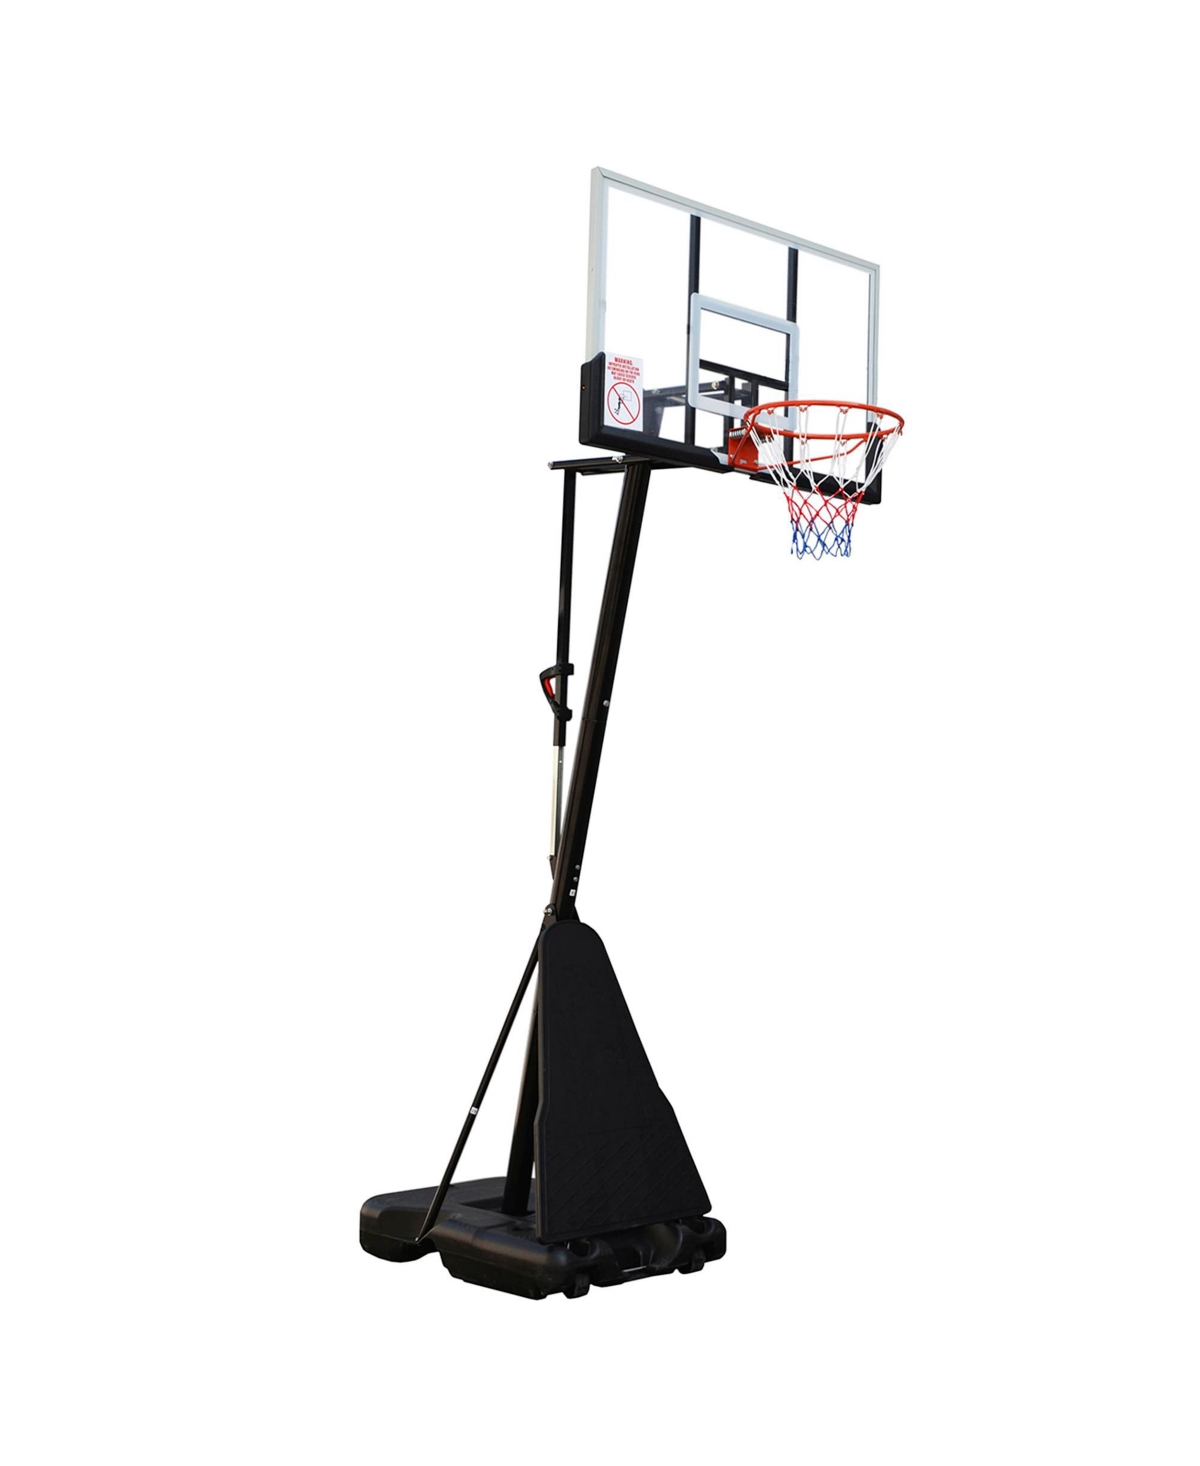 7.5ft - 10ft Height-Adjustable Portable Basketball Hoop - Black